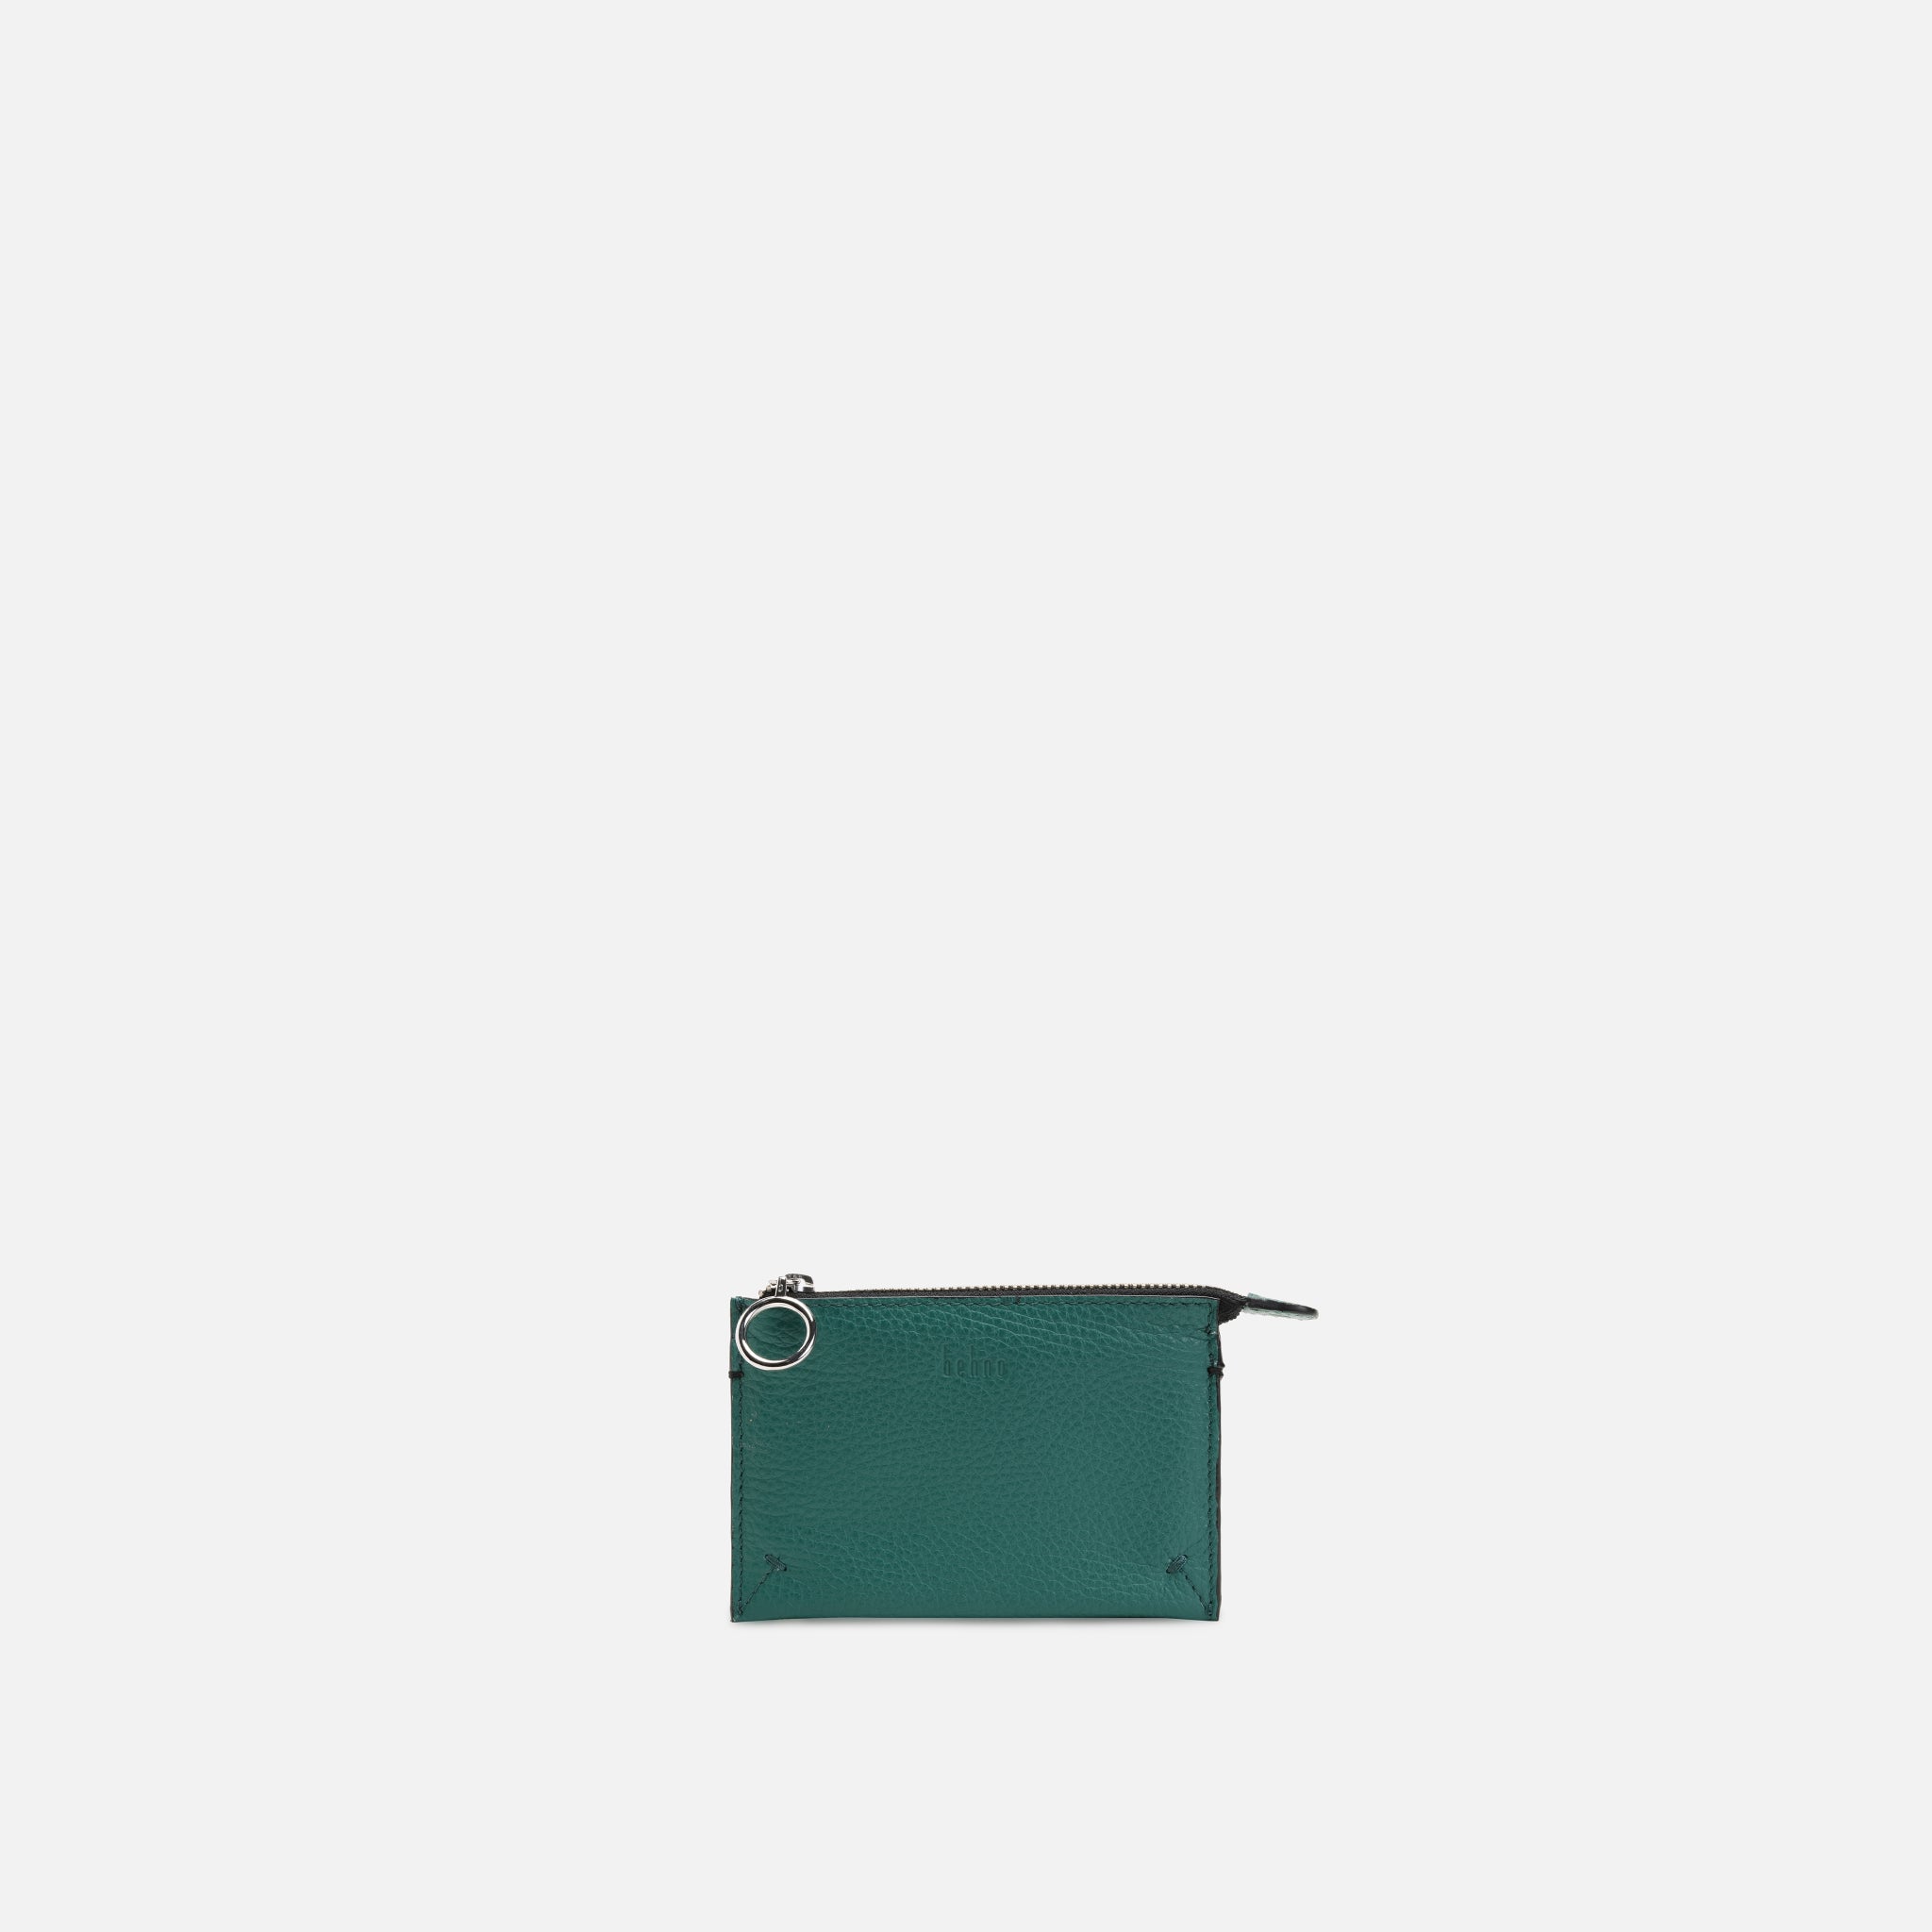 CLN wallet/coin purse, Women's Fashion, Bags & Wallets, Wallets